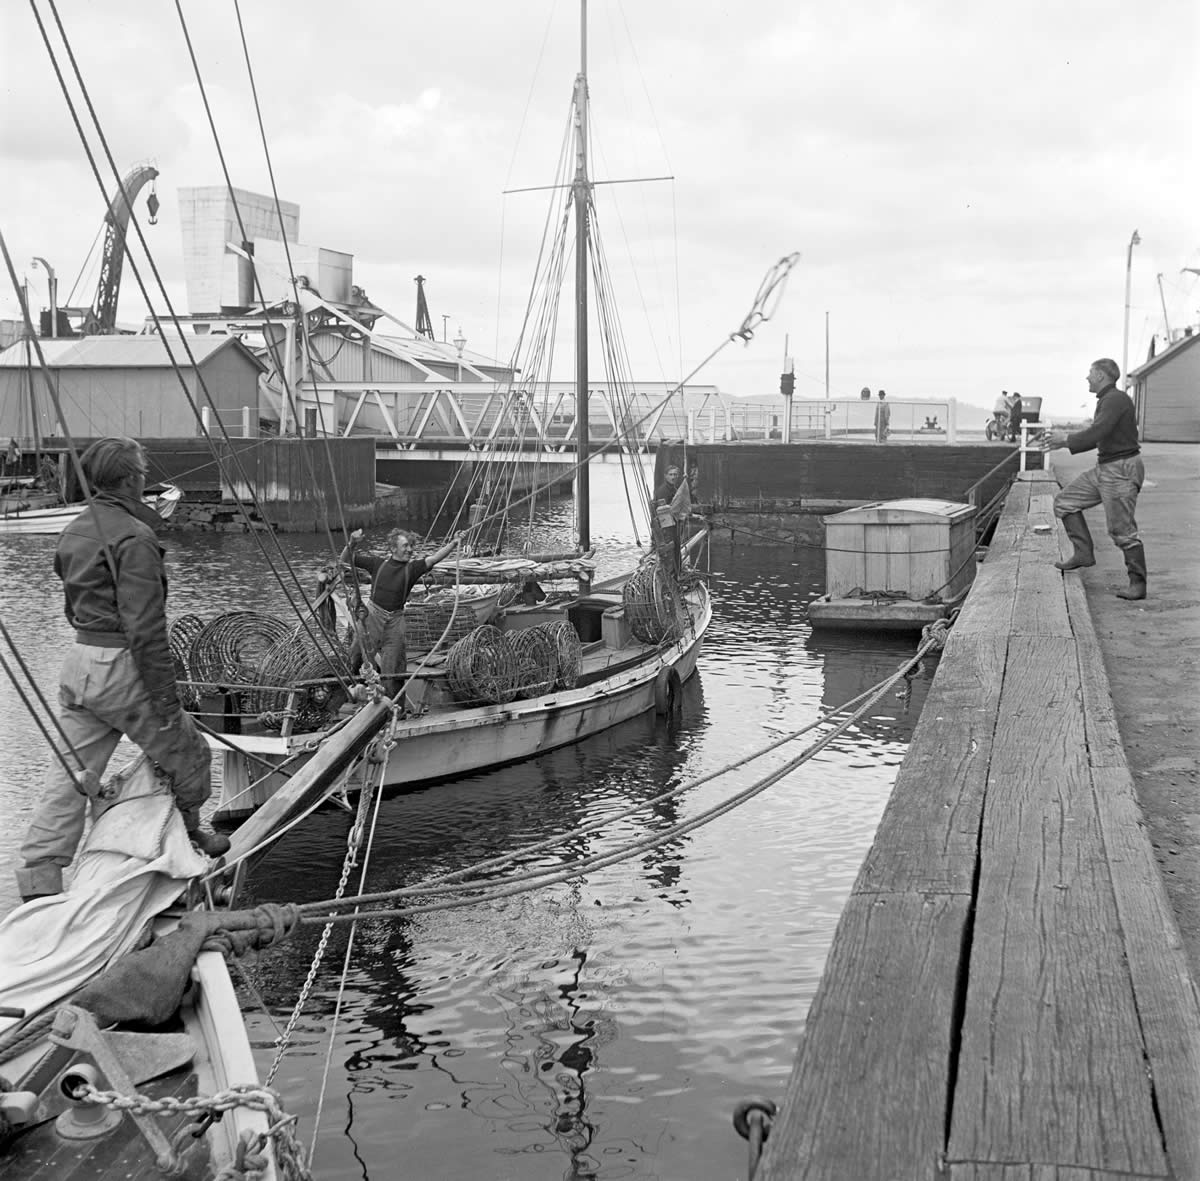 Bascule Bridge Constitution Dock – Hobart wharves